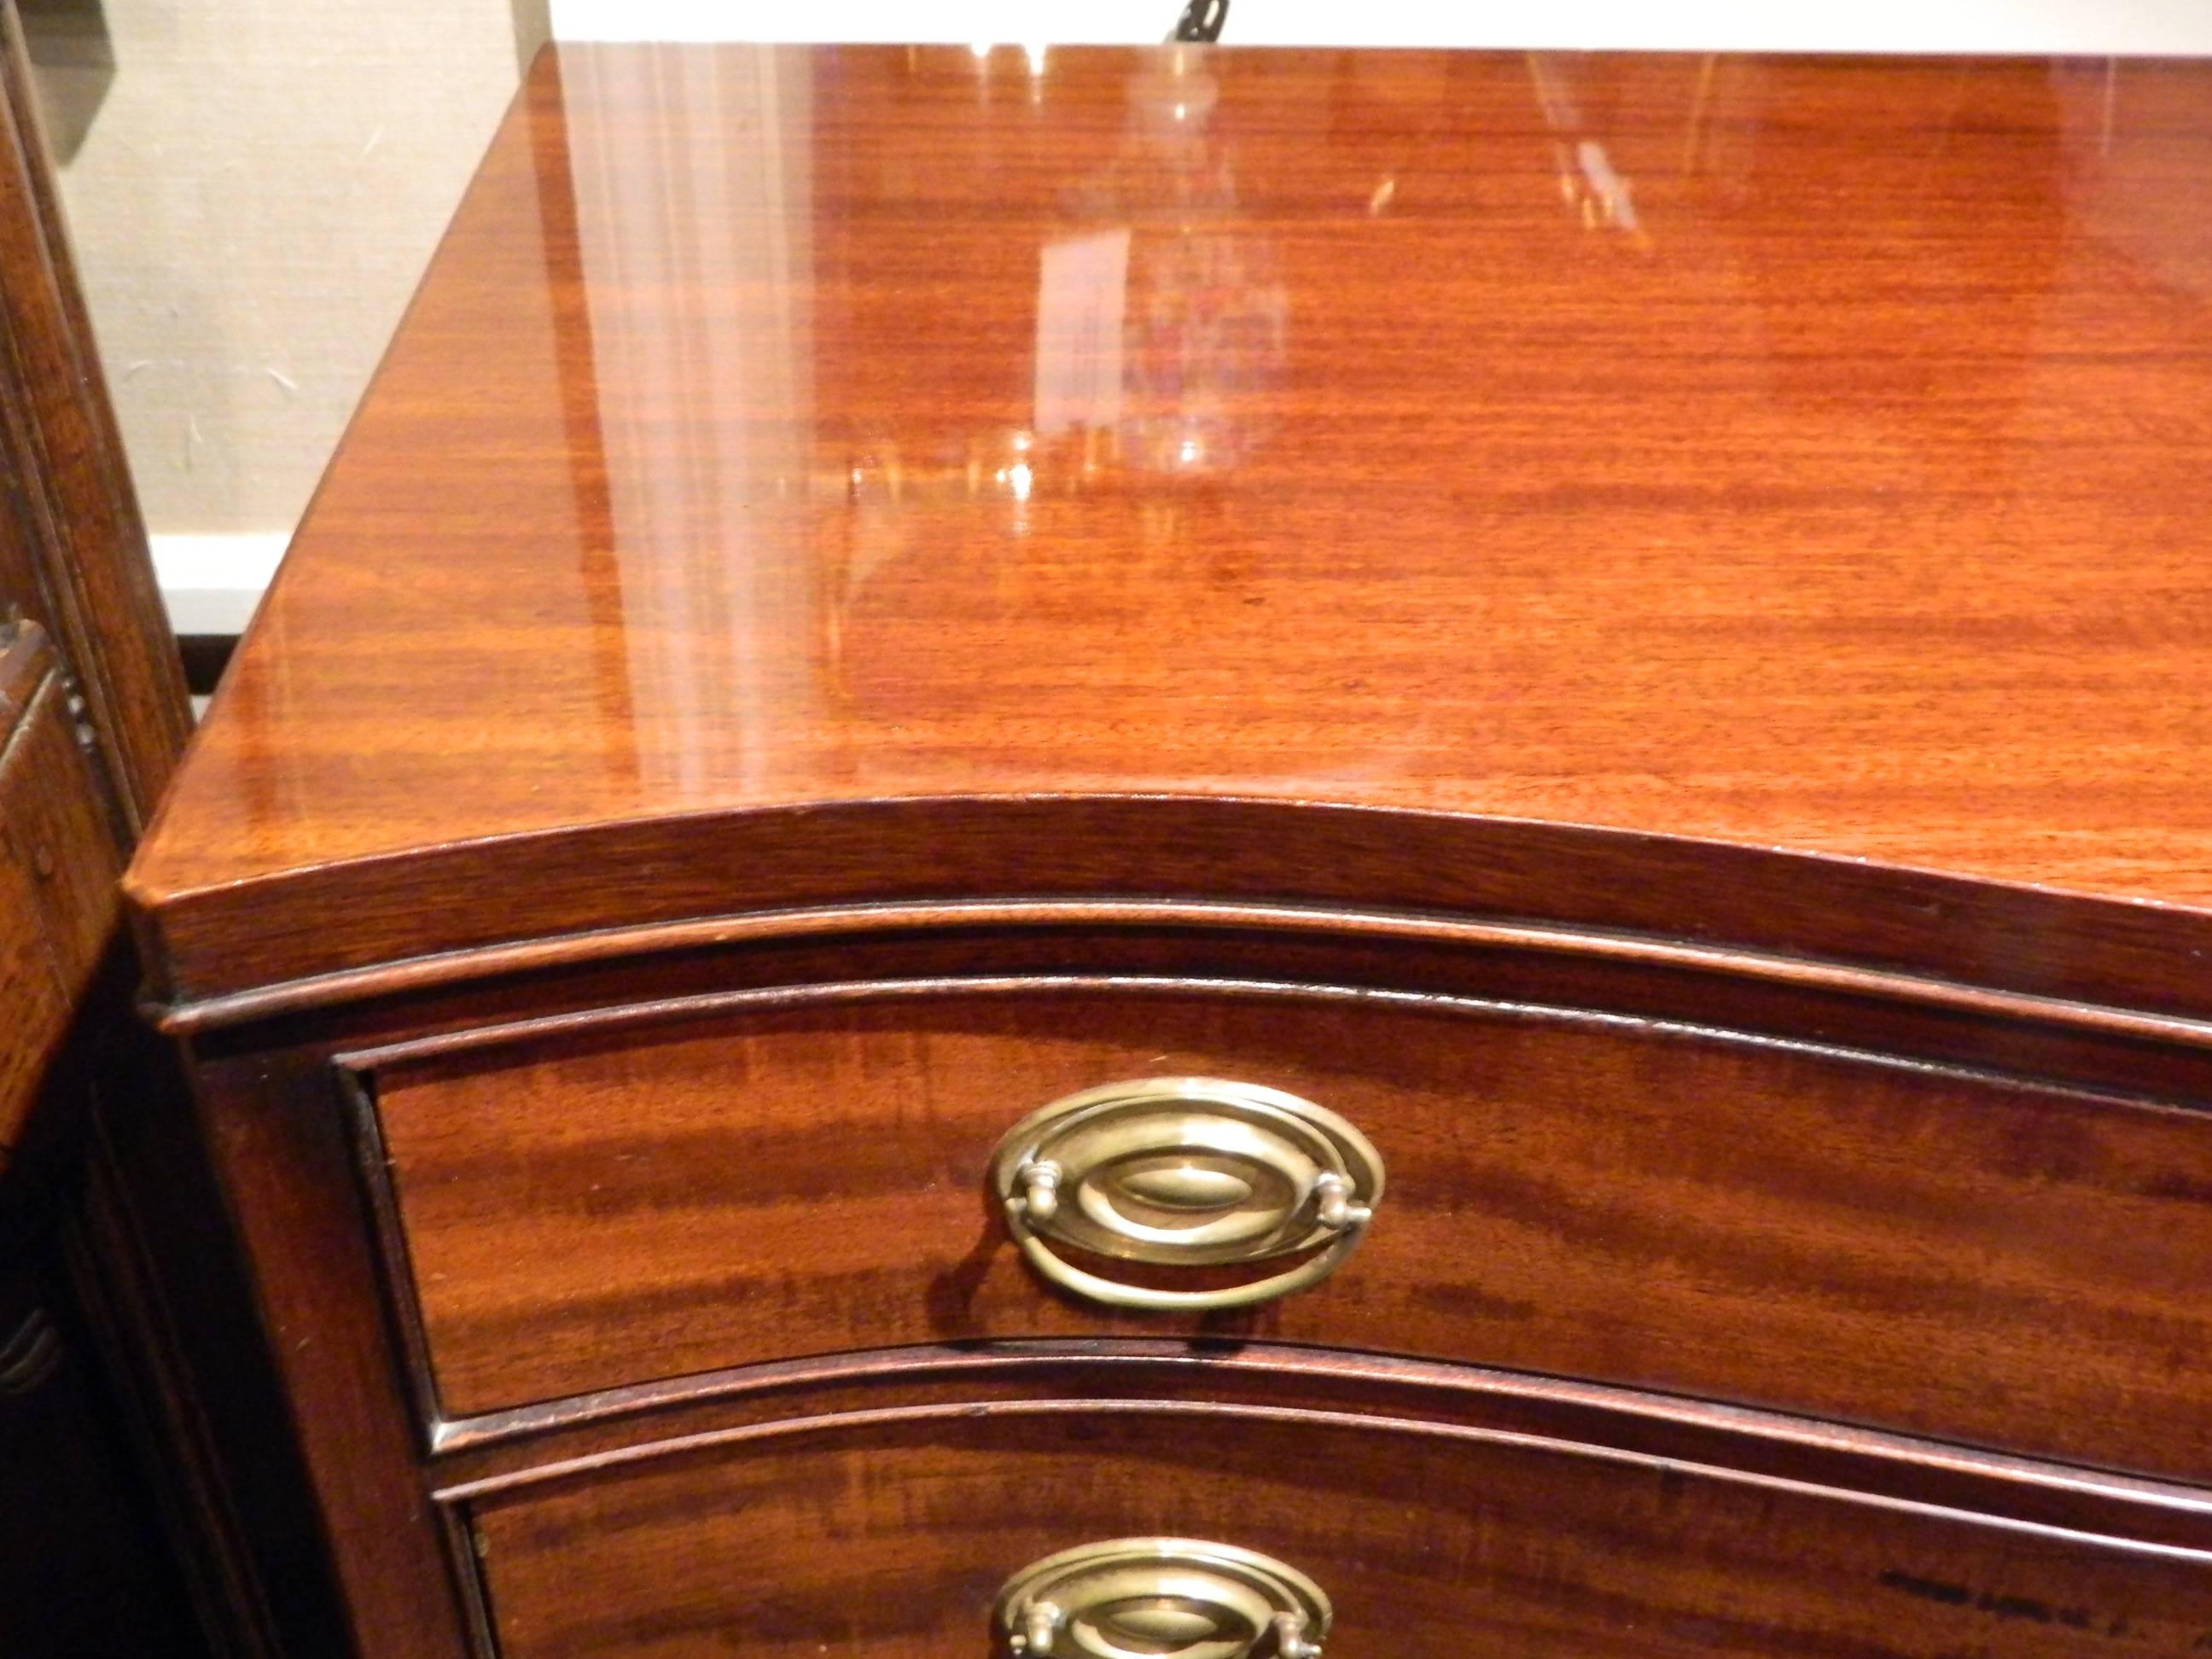 mahogany chest of drawers 1940